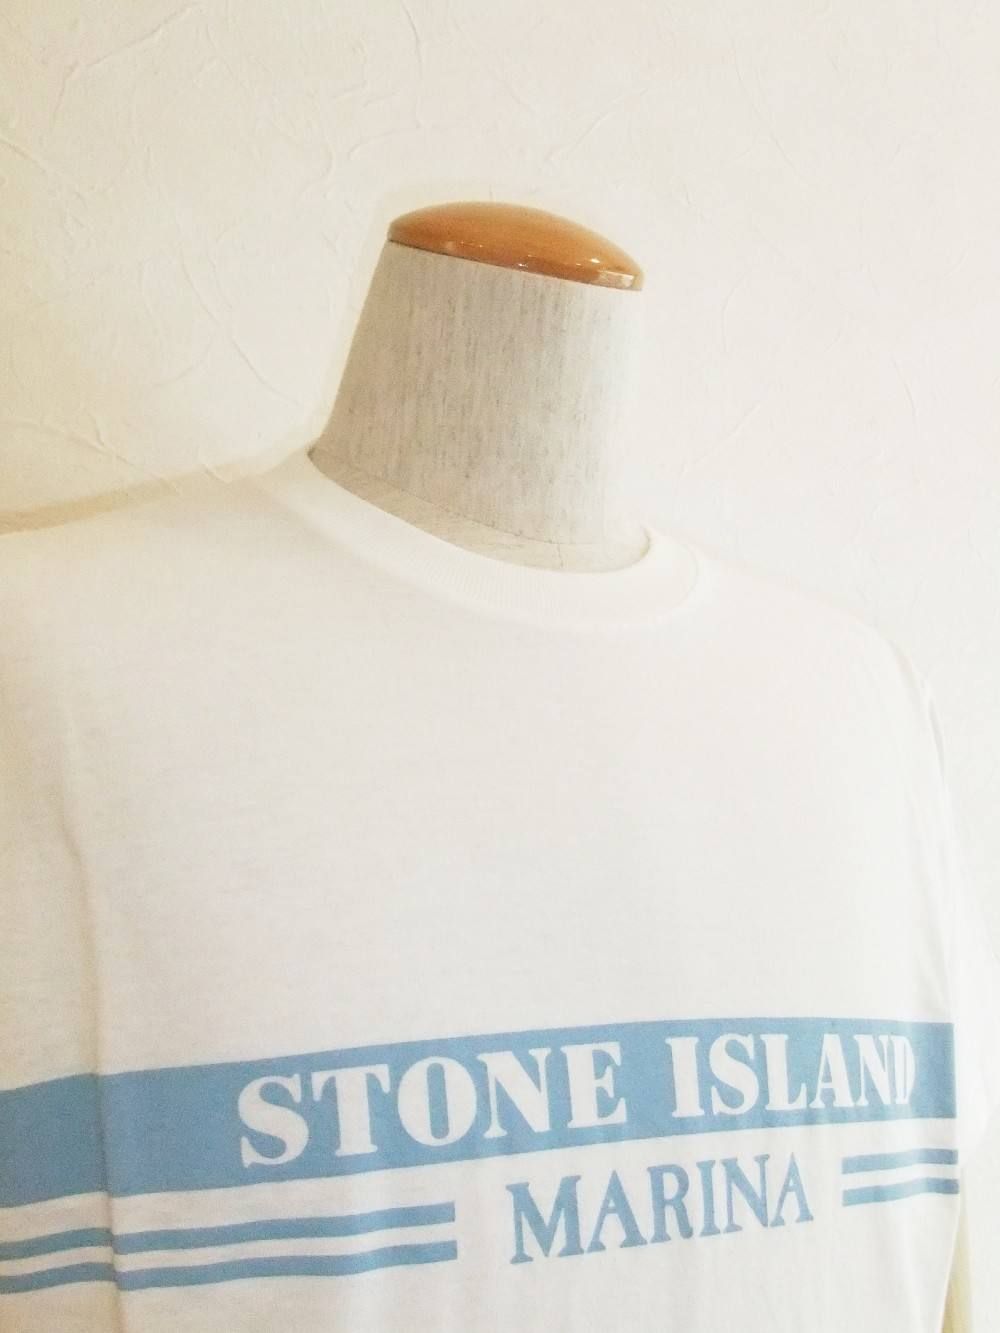 STONE ISLAND - STONE ISLAND (ストーン アイランド) マリーナ 胸ロゴ